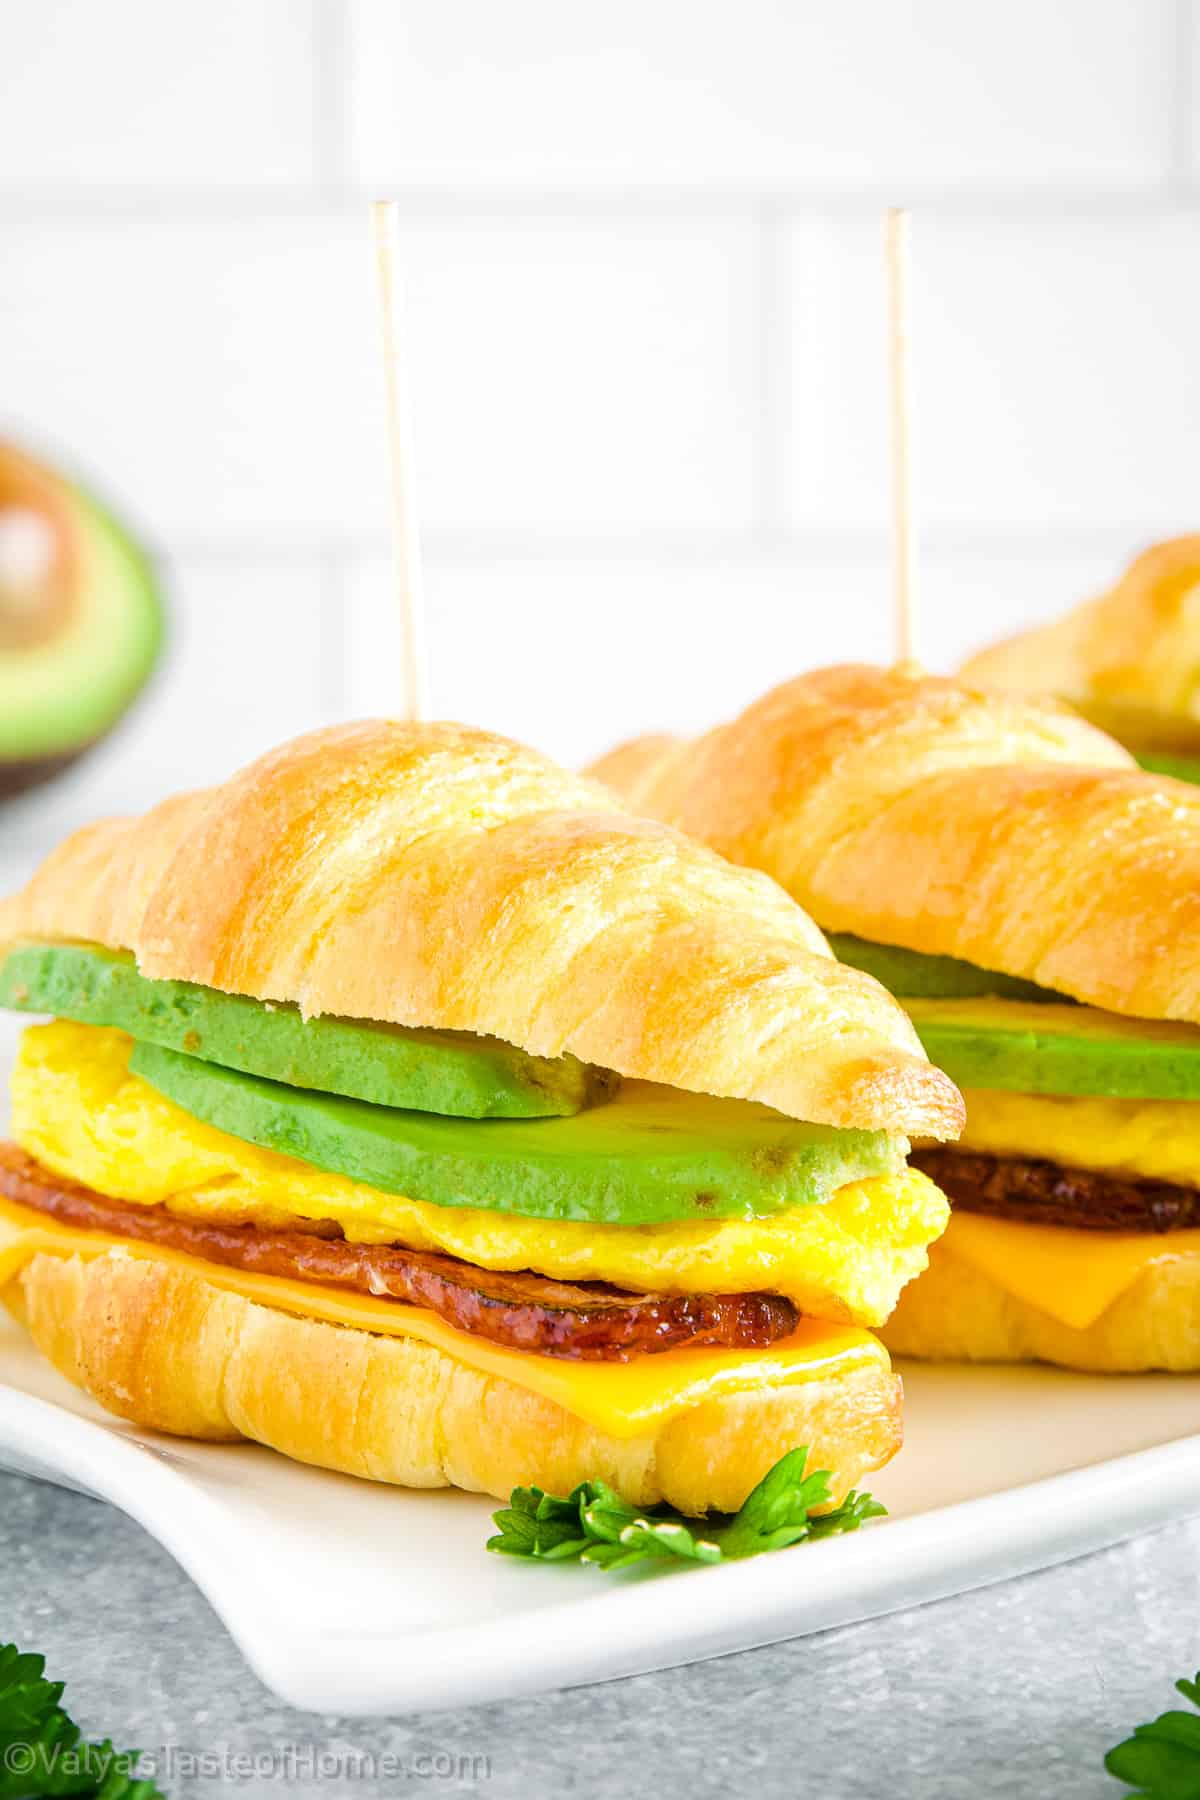 https://www.valyastasteofhome.com/wp-content/uploads/2022/01/Scrambled-Egg-Sandwich-Easy-Make-Ahead-Breakfast-Sandwich-4.jpg